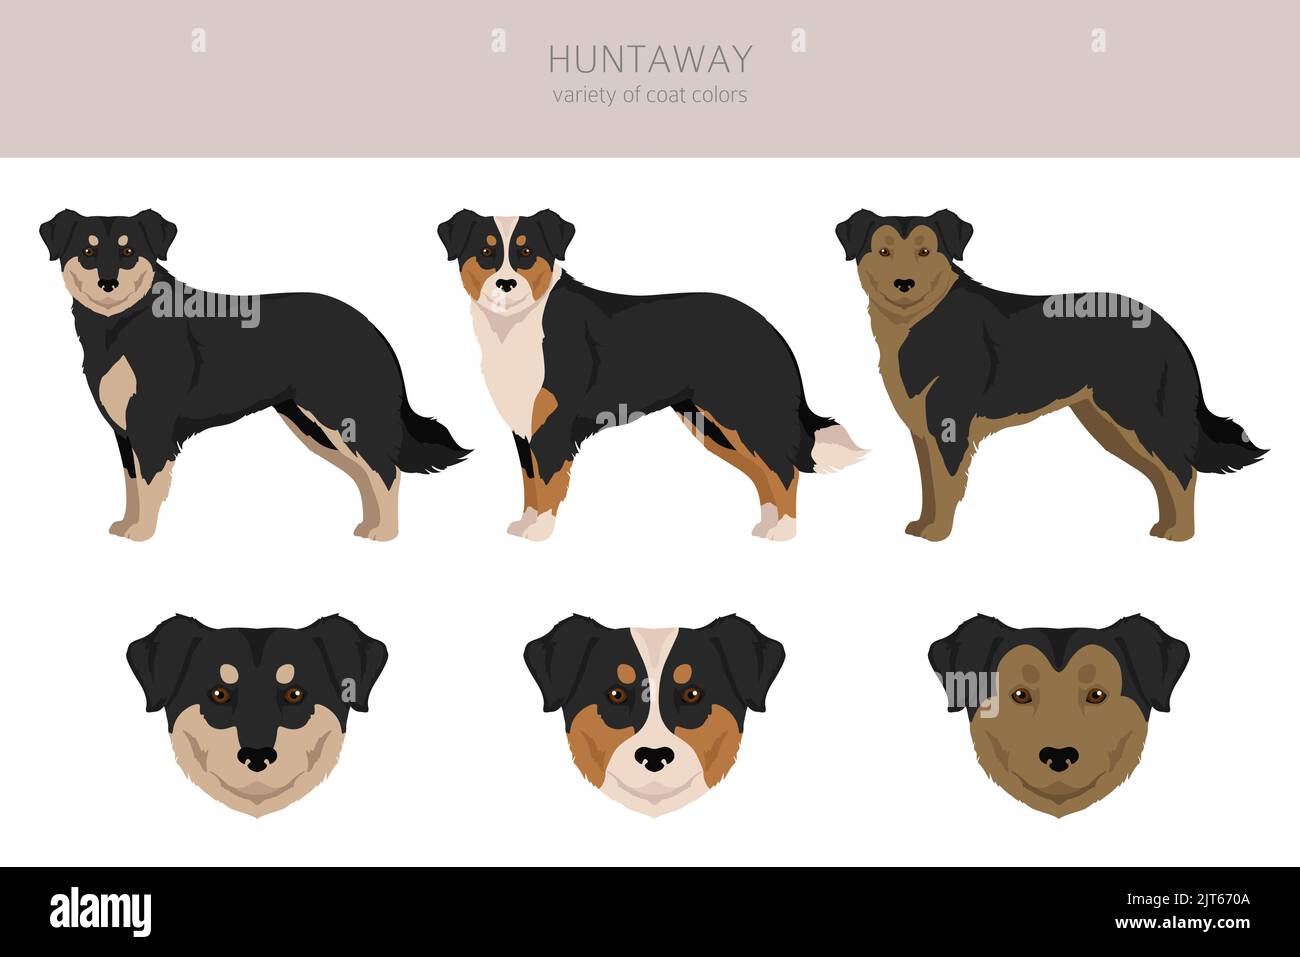 Huntaway dog clipart. Different poses, coat colors set.  Vector illustration Stock Vector